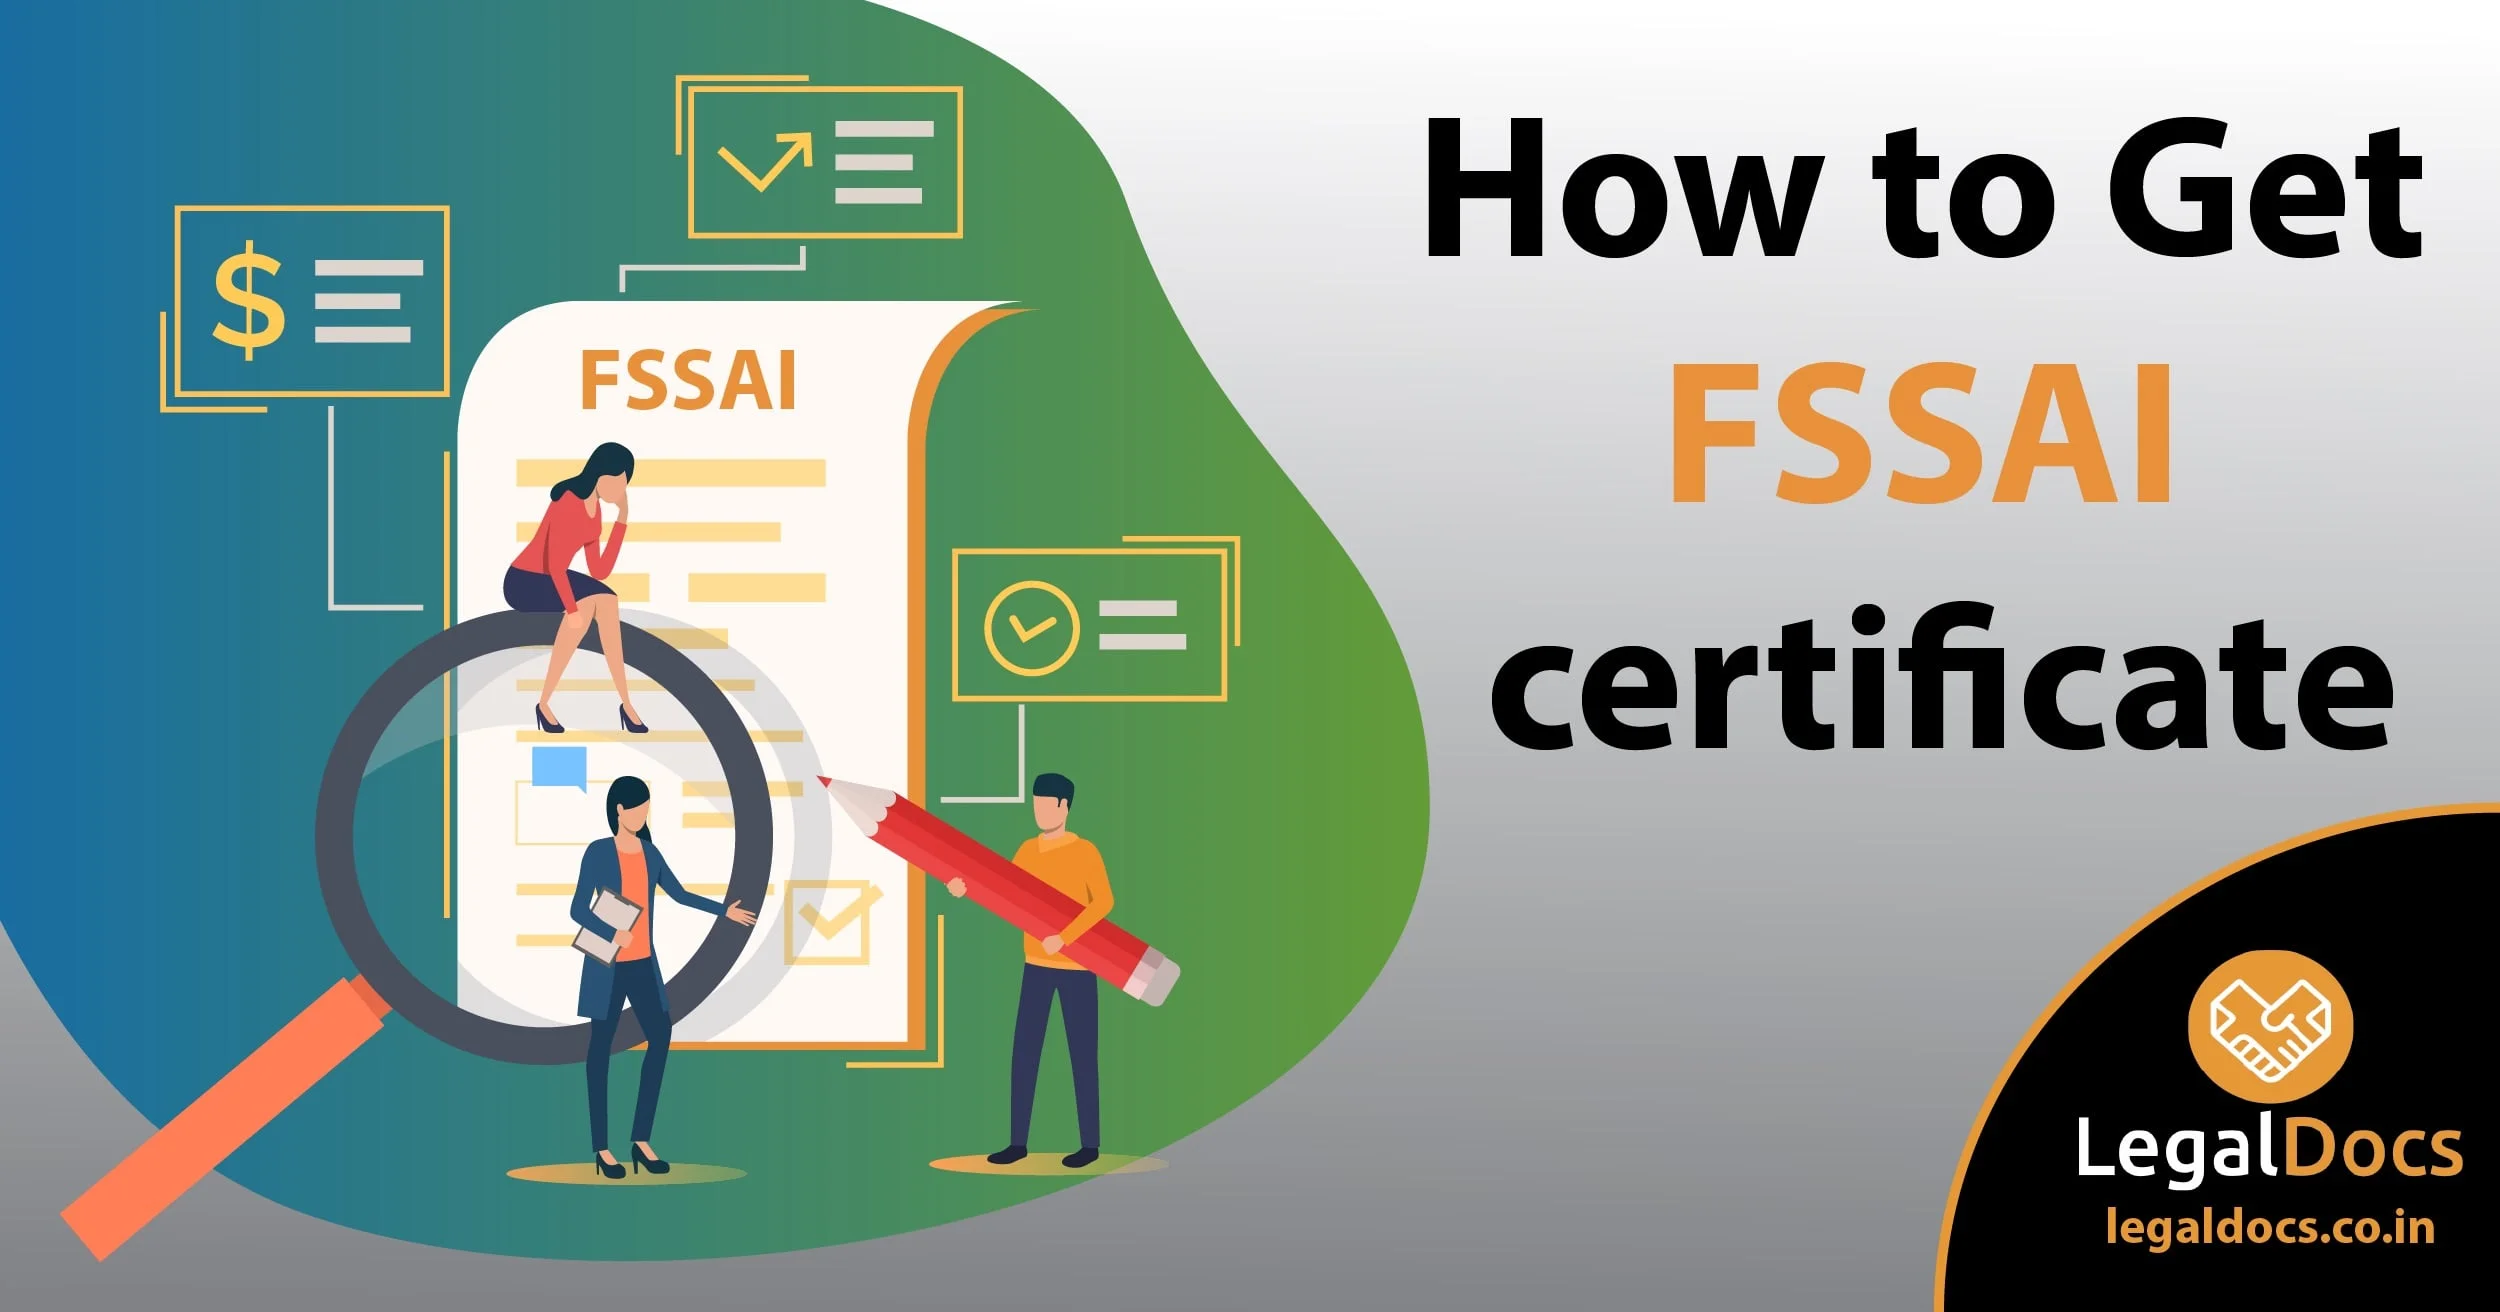 How to Get FSSAI Certificate - LegalDocs